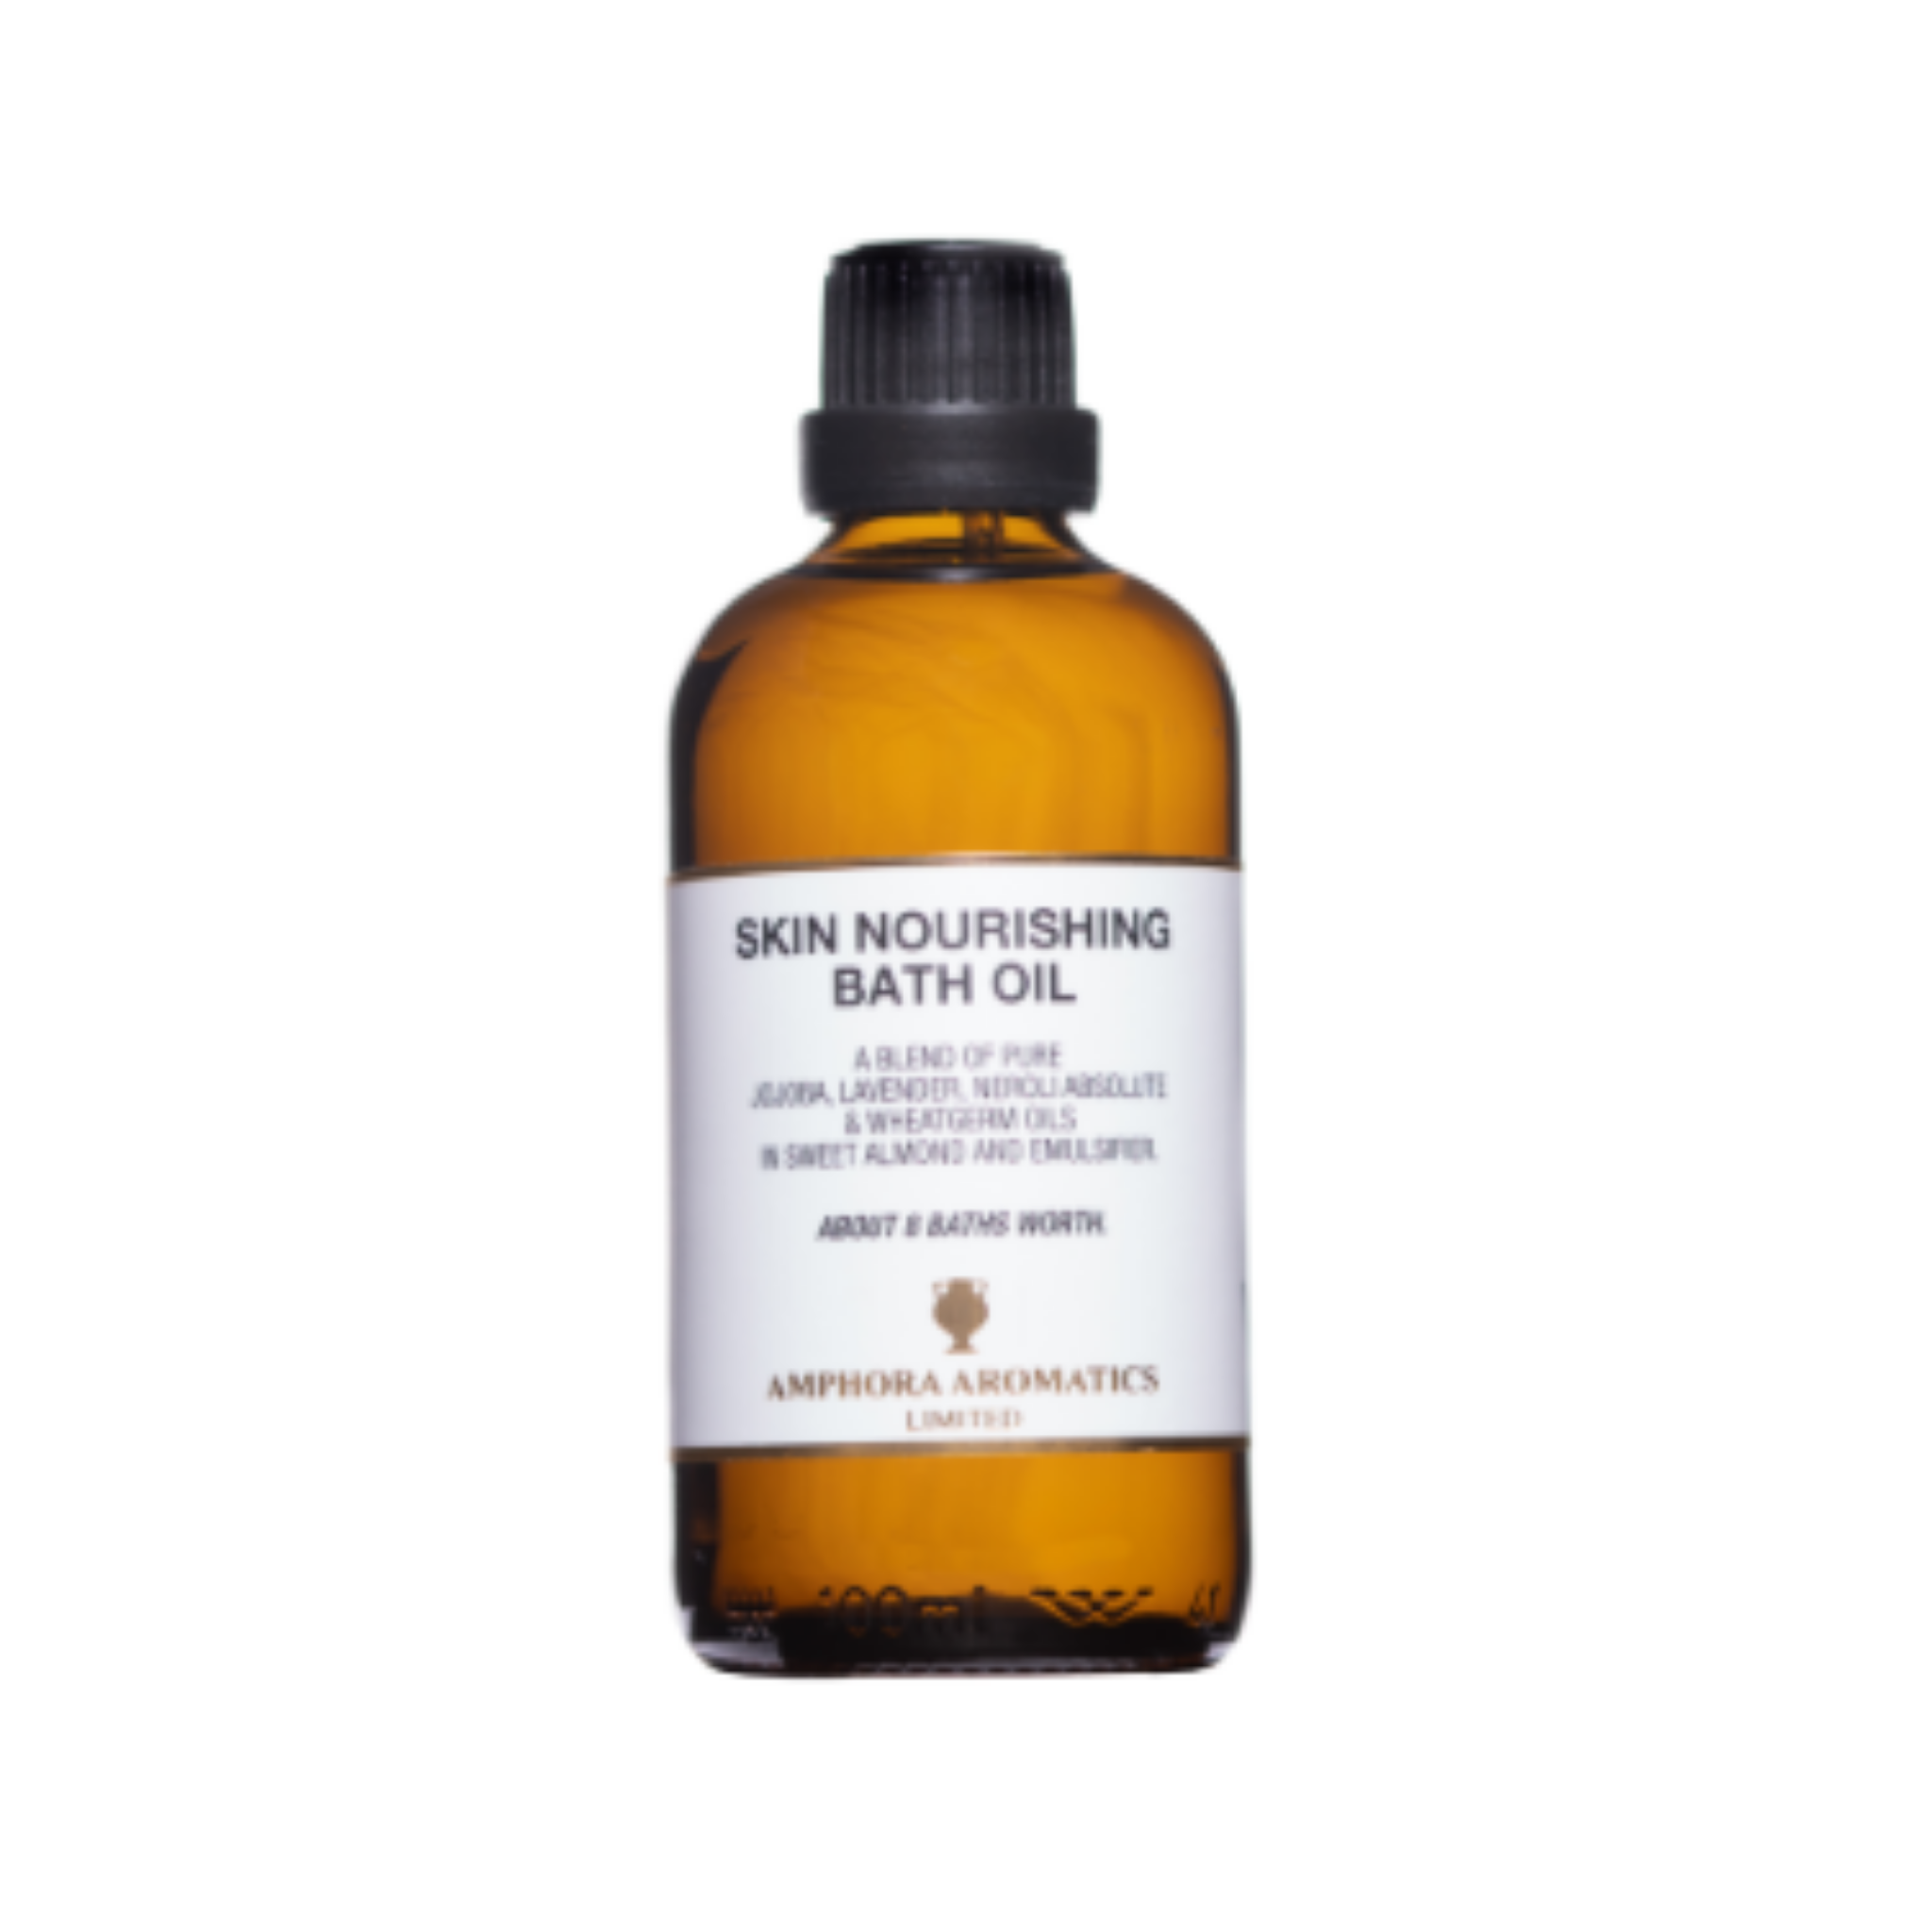 Skin Nourishing Bath Oil by Amphora Aromatics